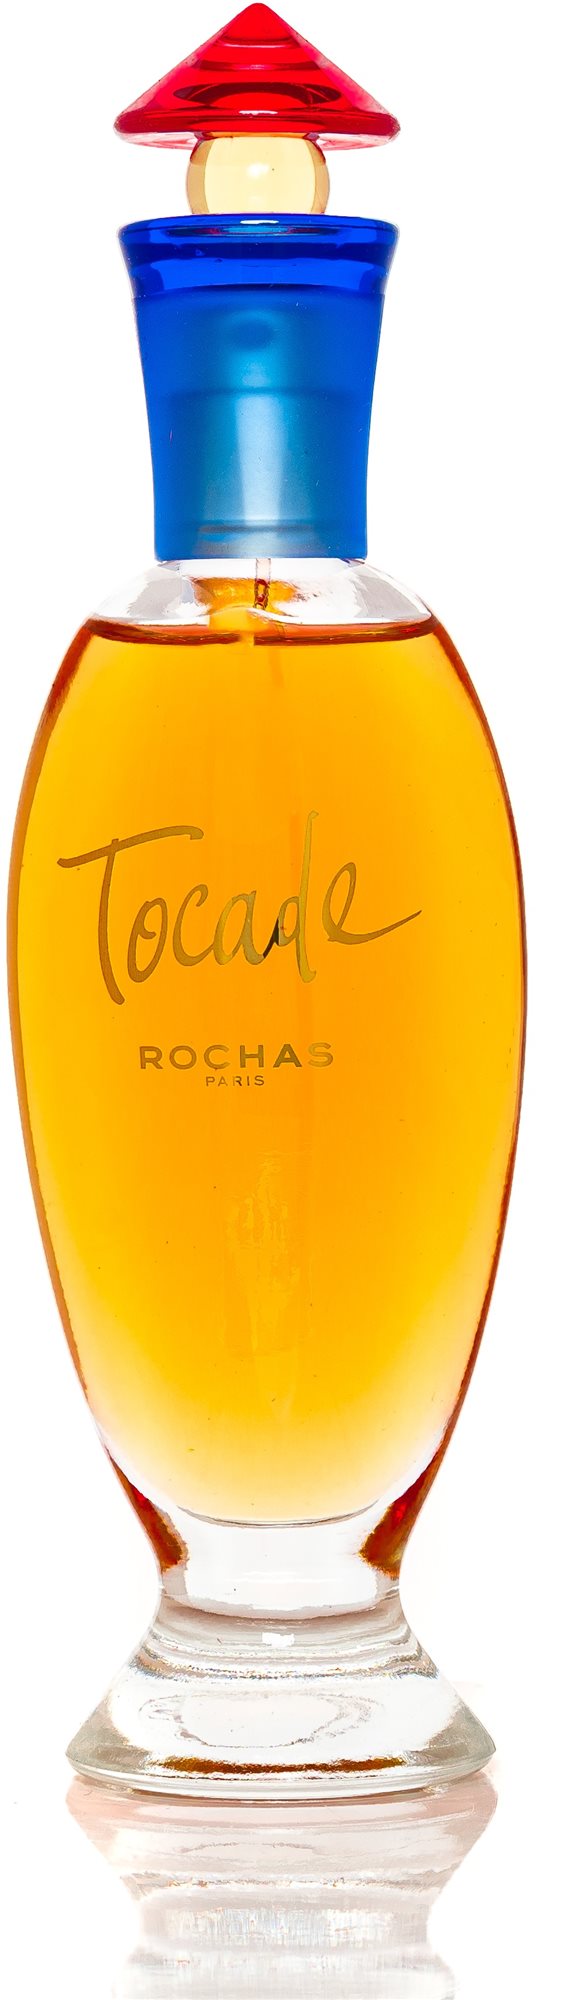 ROCHAS Tocade EdT 100 ml